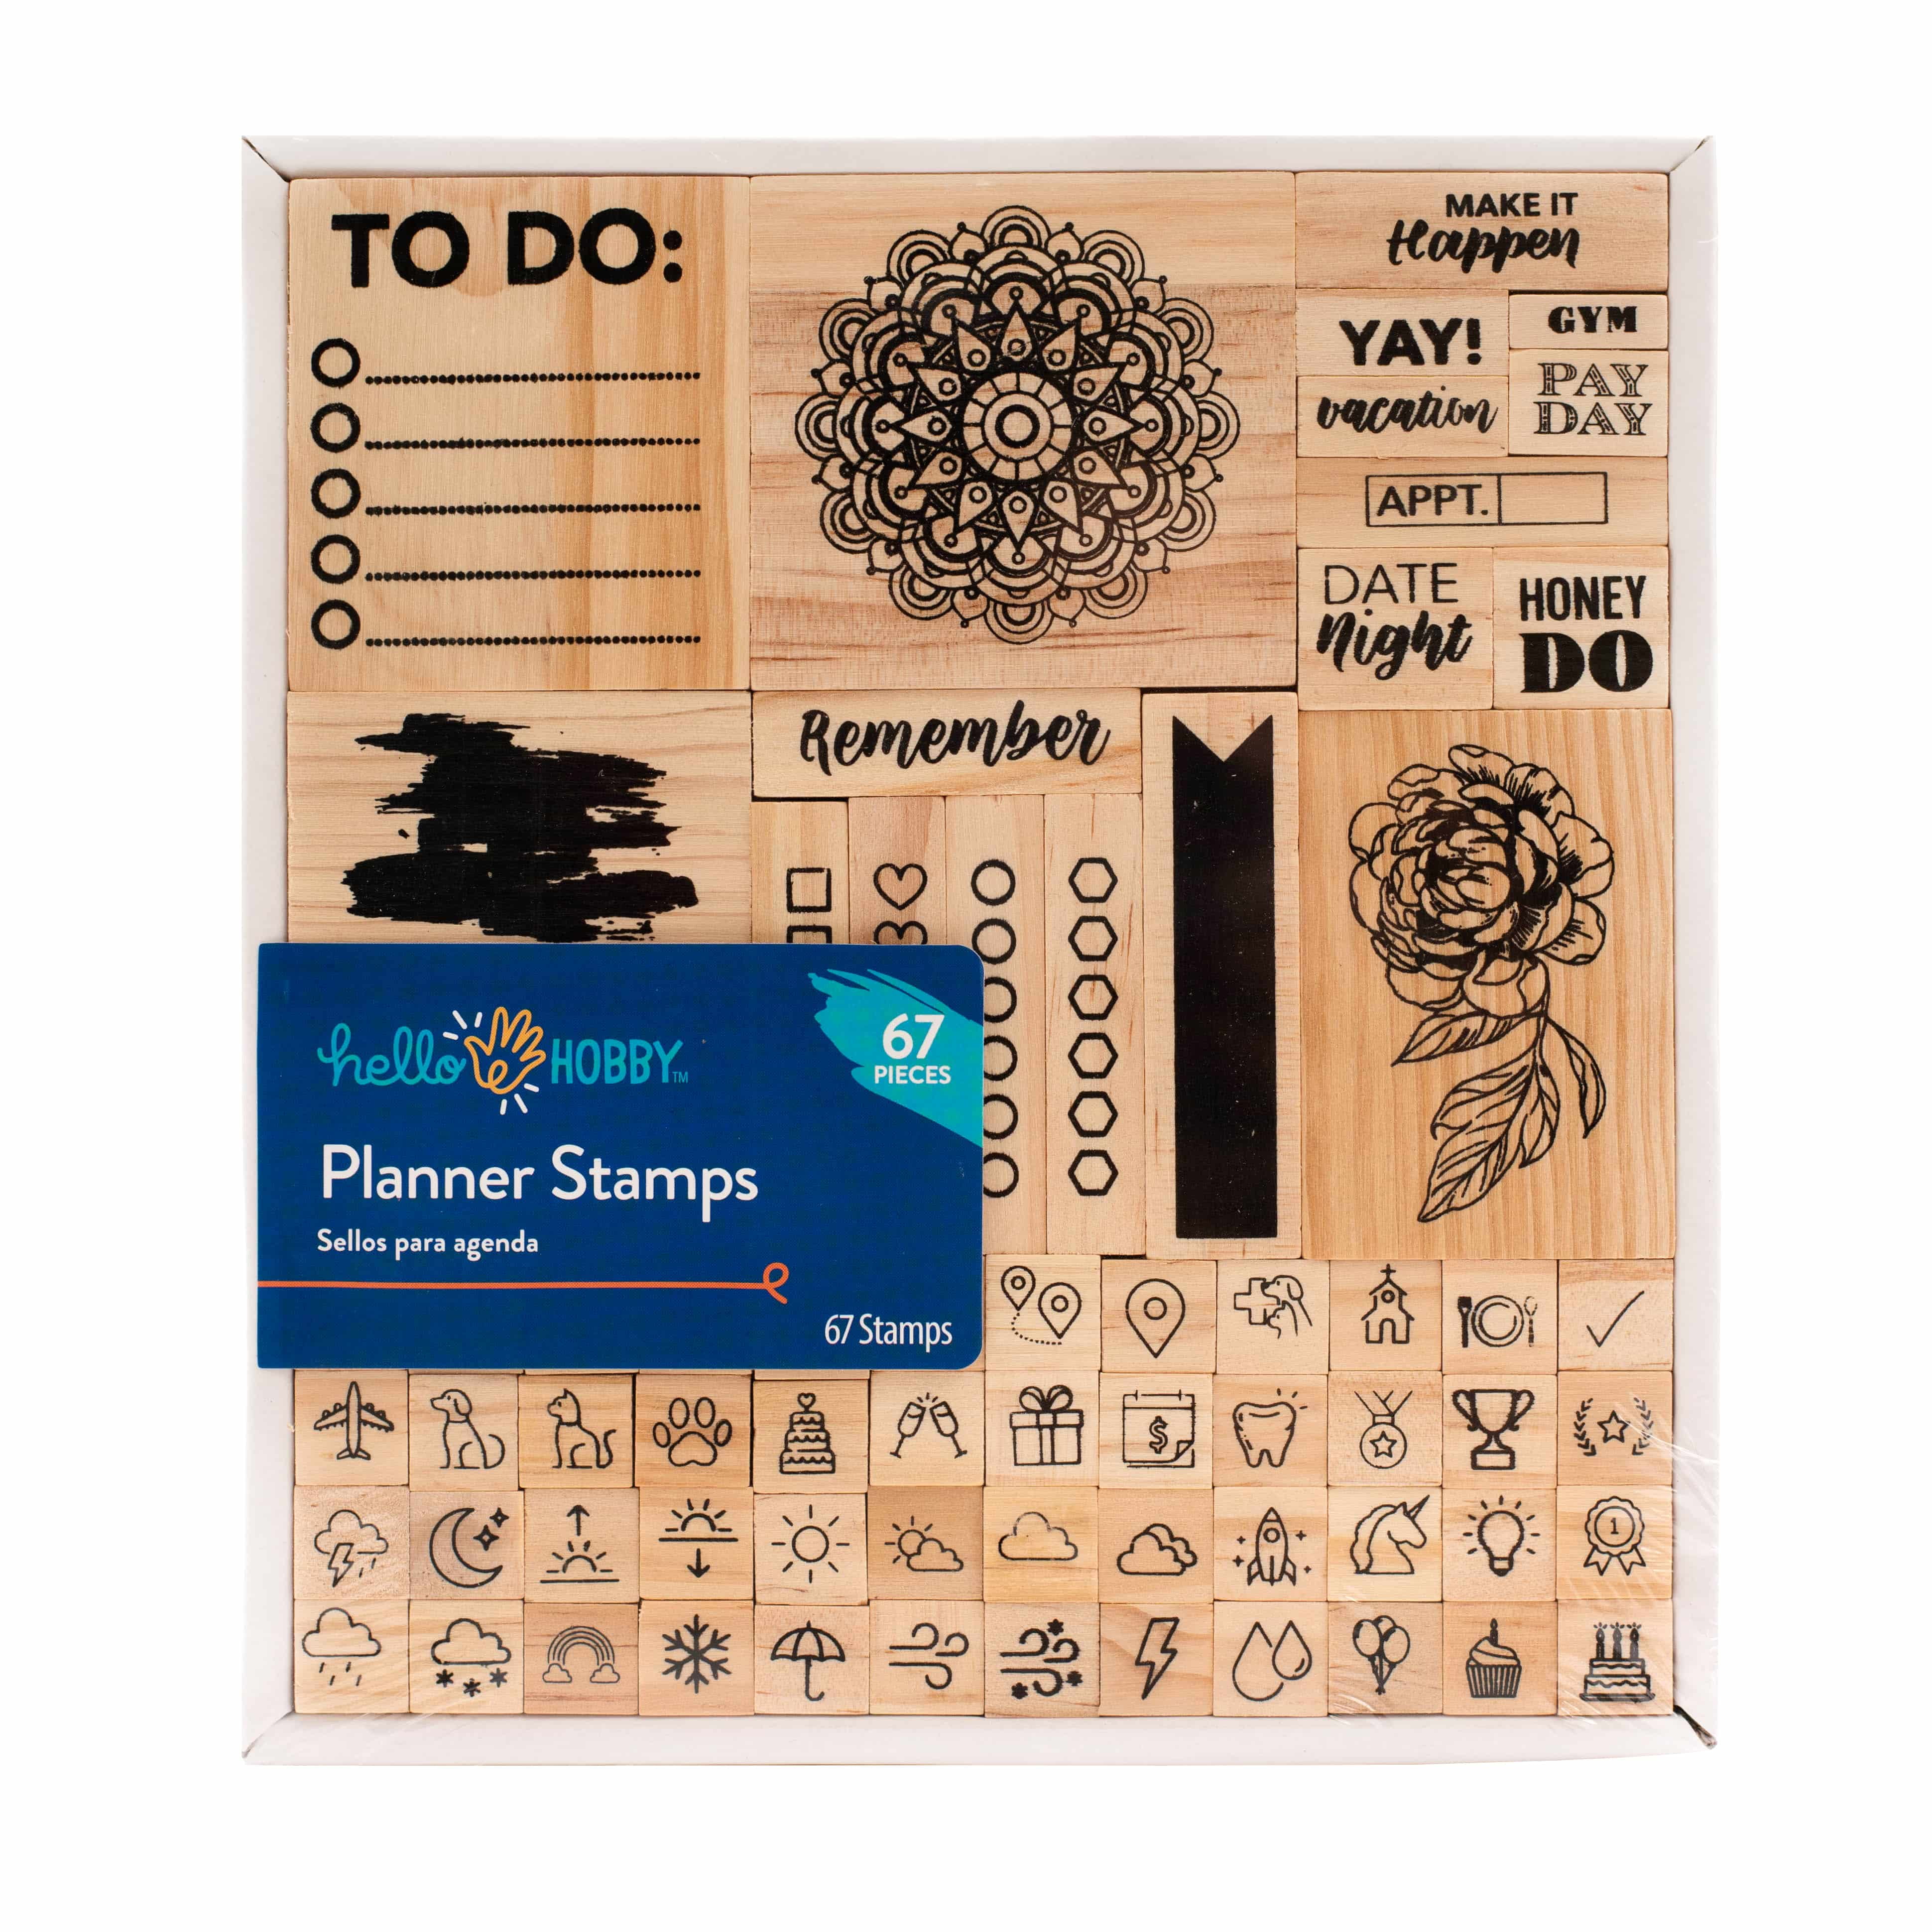 6 Packs: 26 ct. (156 total) Walnut Hollow® Hot Stamps Alphabet Set